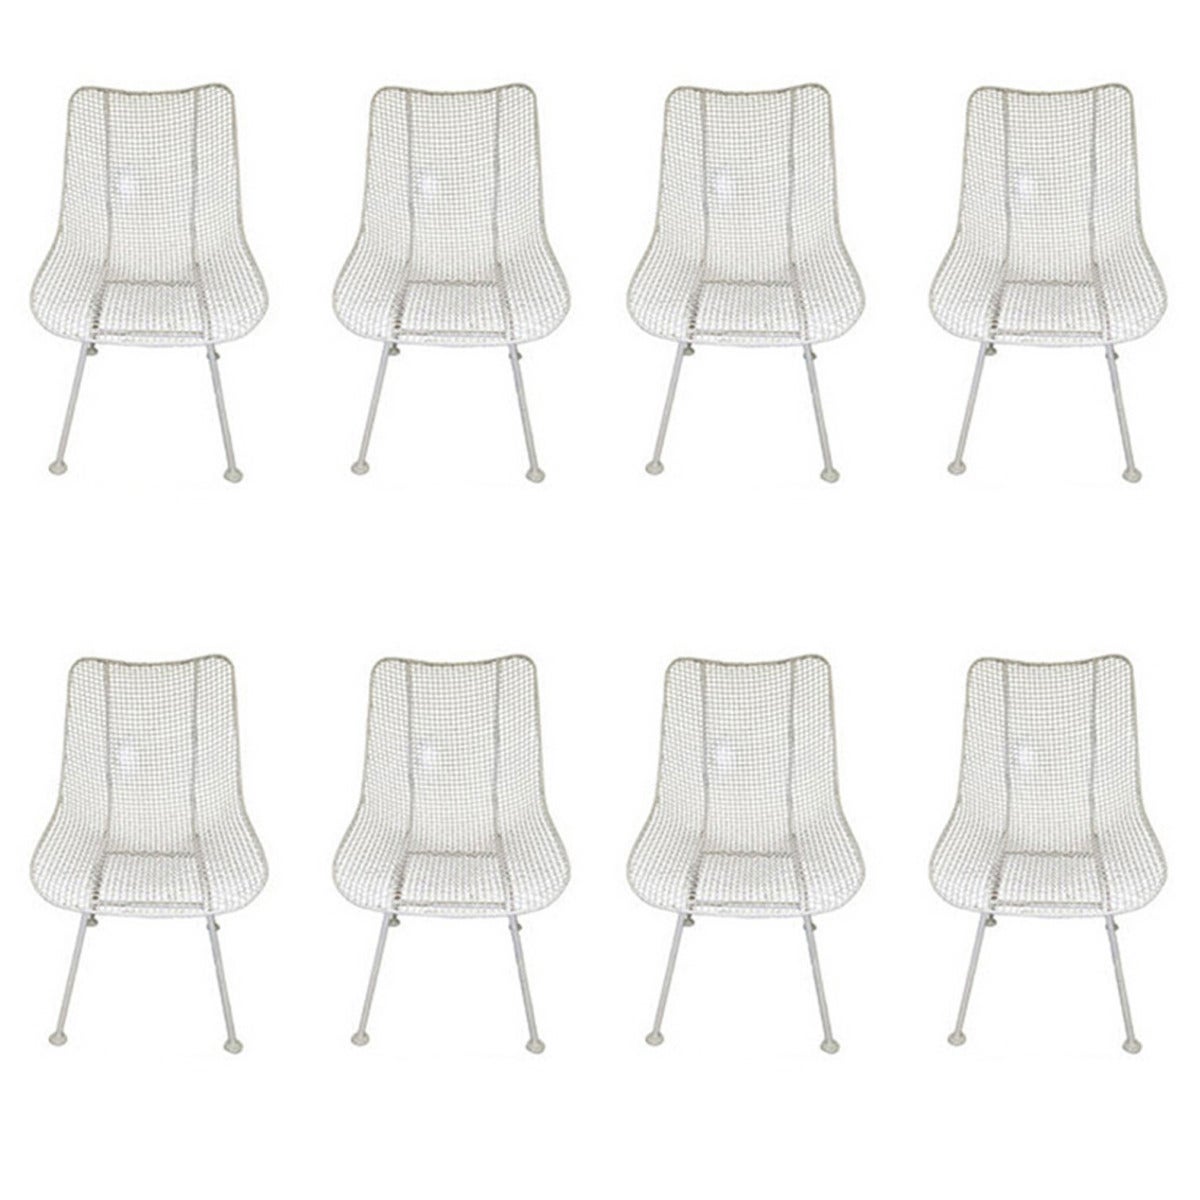 Russell Woodard Sculptura Outdoor/Patio Chairs, Set of 8